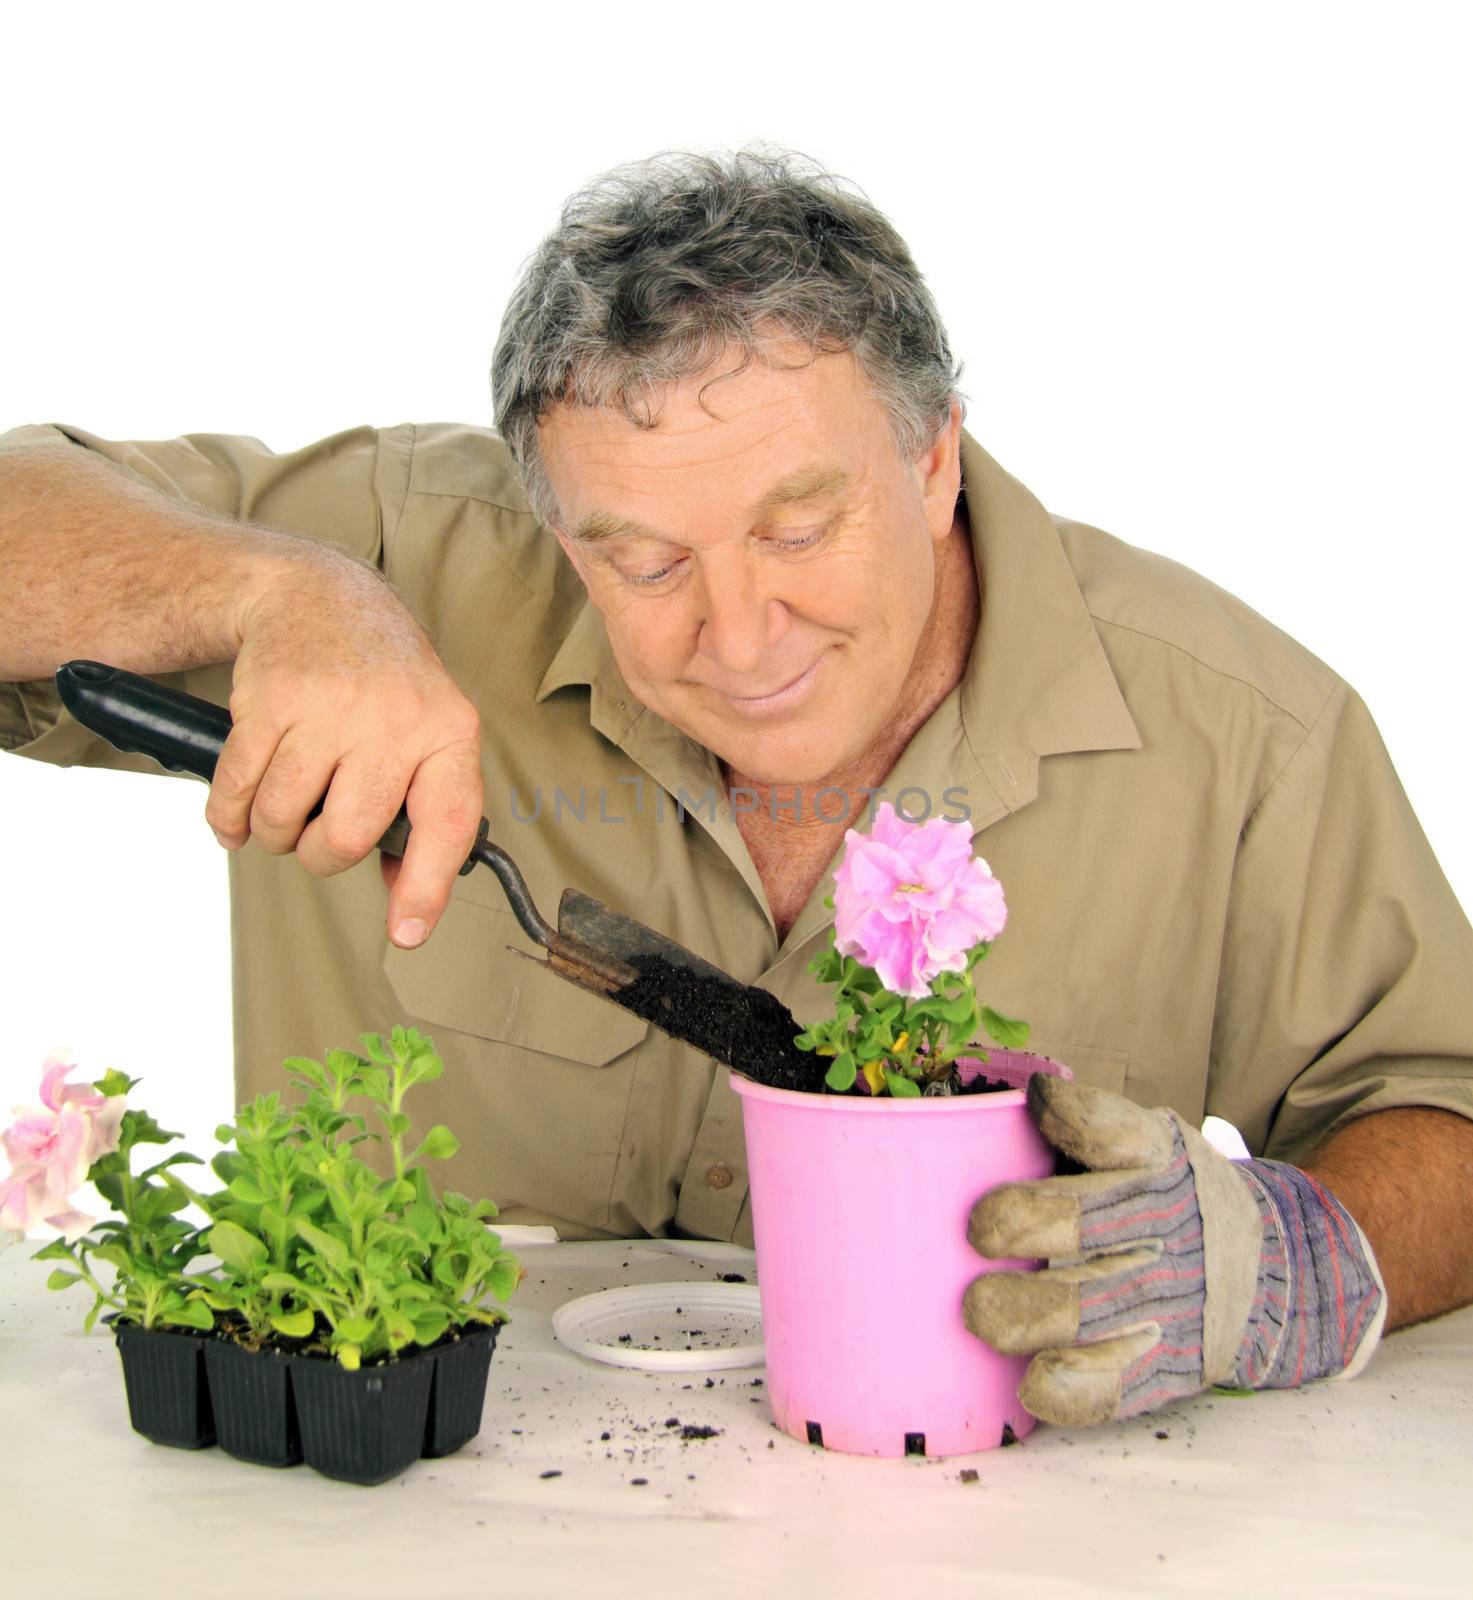 Nurseryman plants a new seedling with loving care.